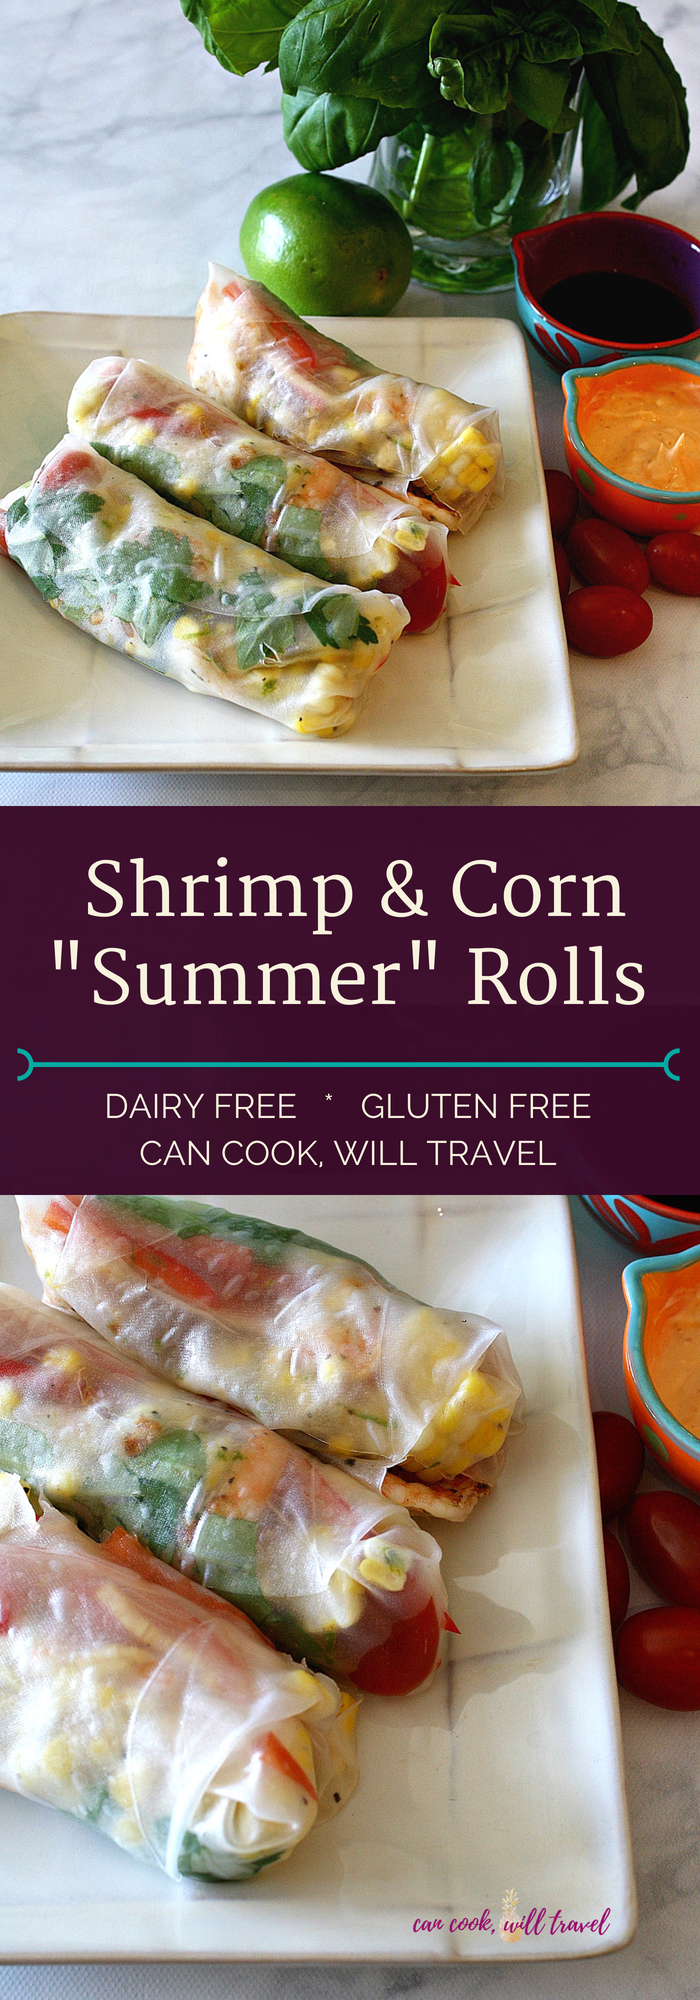 Shrimp Corn Summer Rolls_Collage1